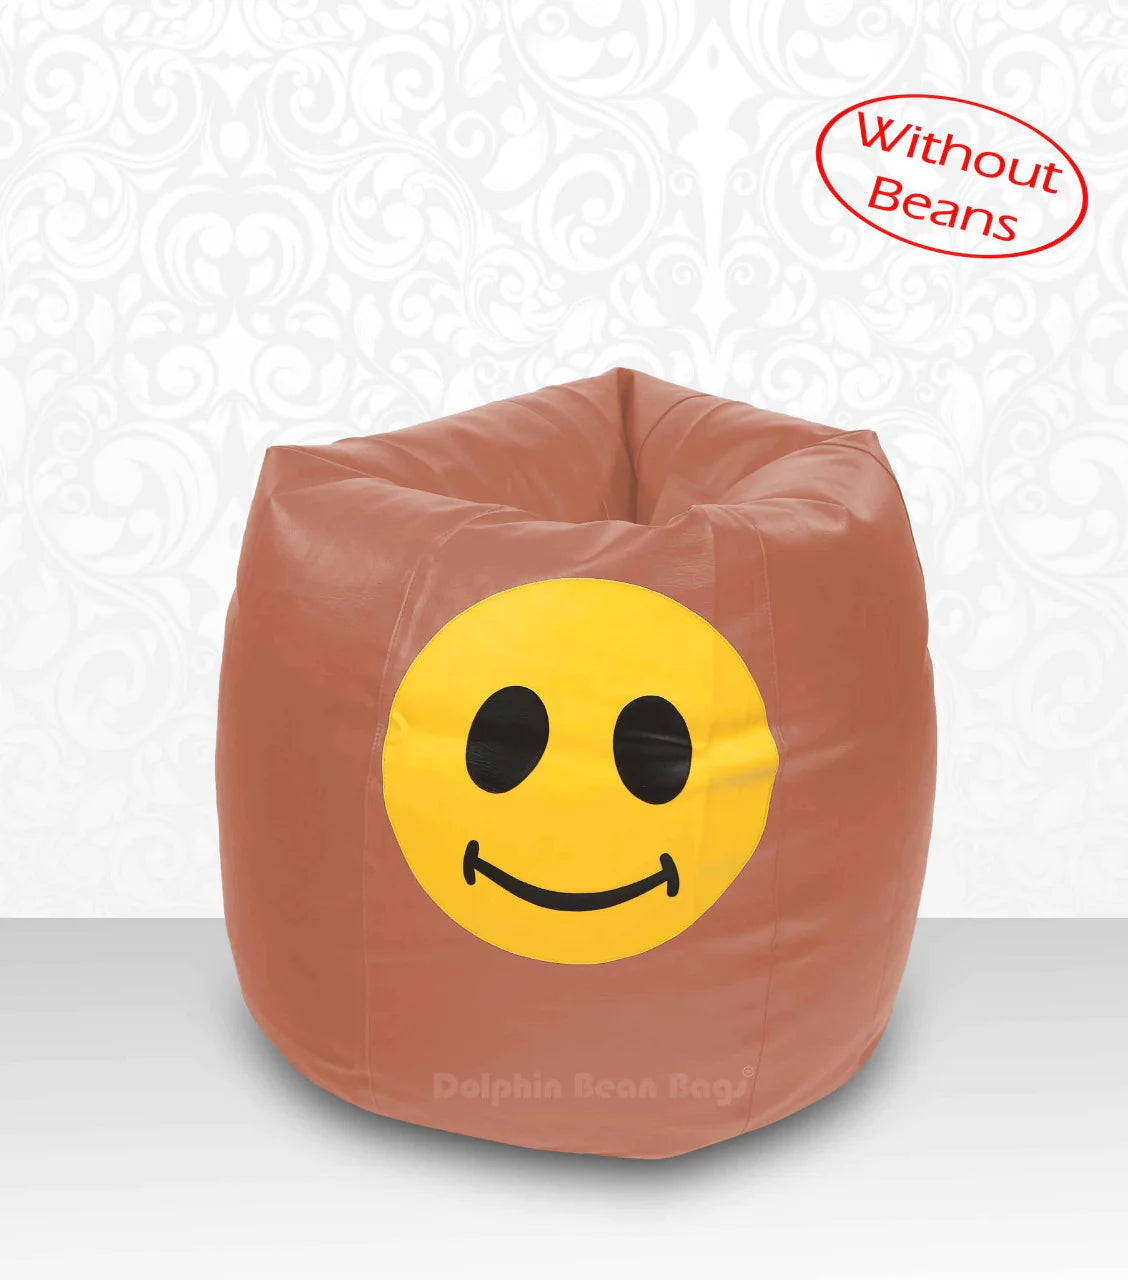 Bean Bag: XL Bean Bag Cute-Smiley-Cover (Without Beans)